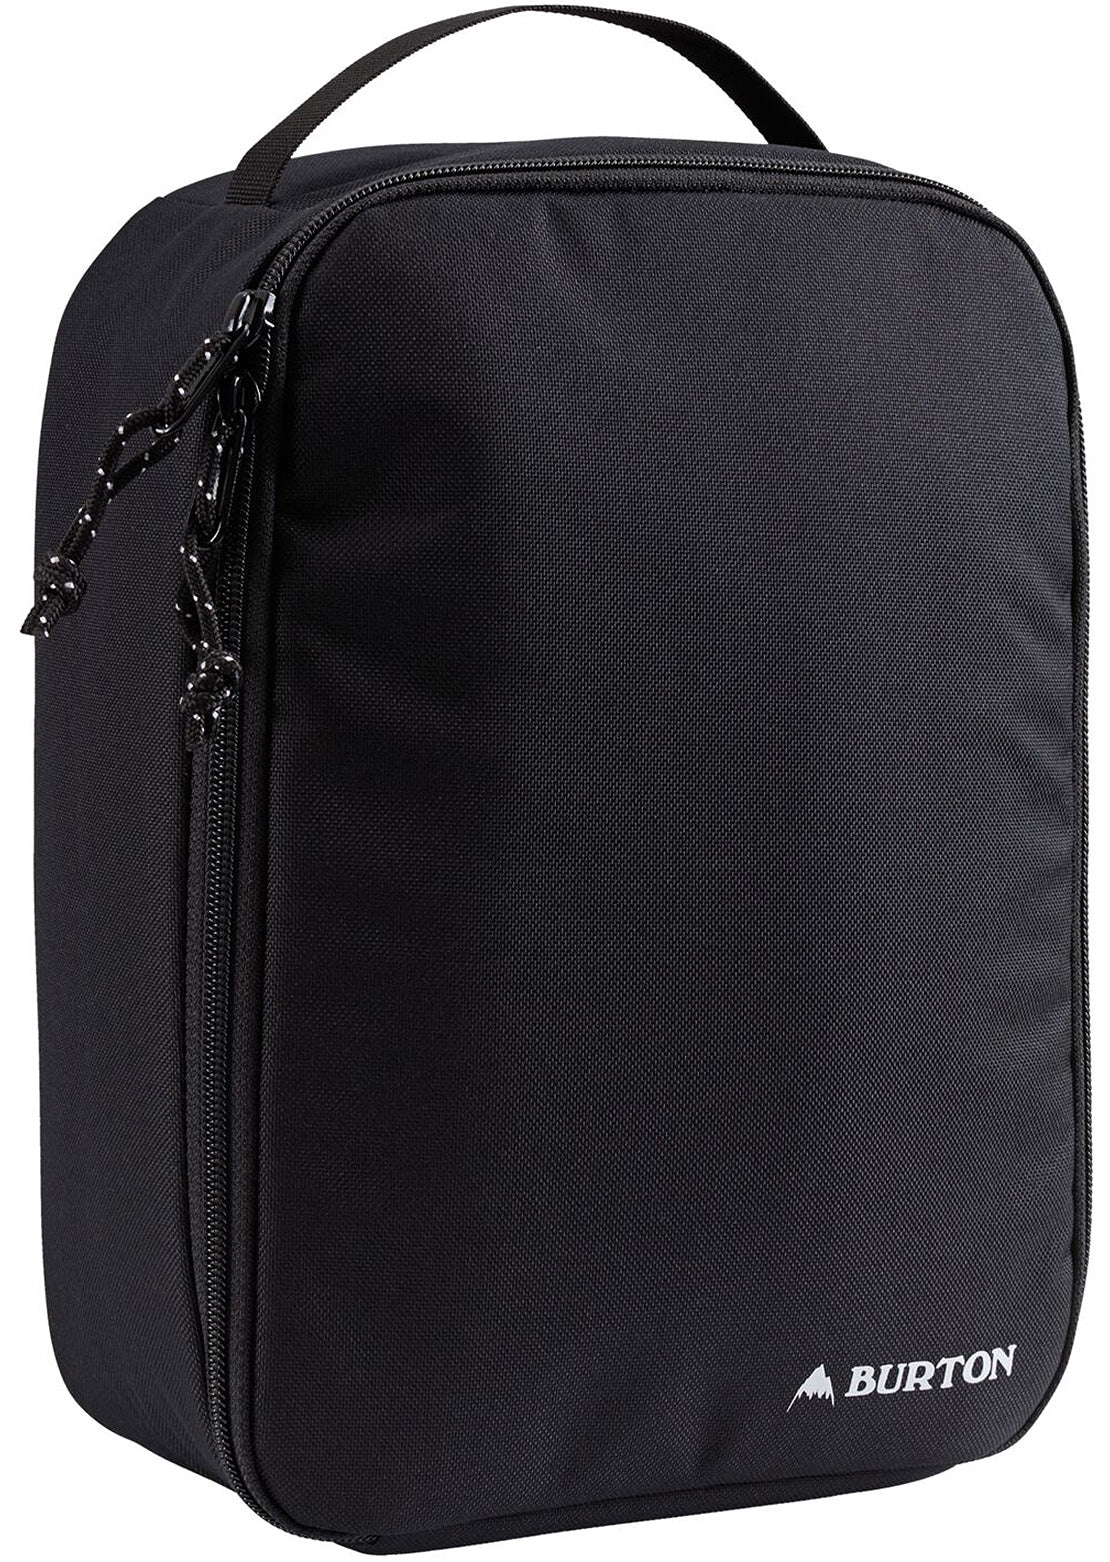 Burton Lunch-N-Box 8L Cooler Bag True Black